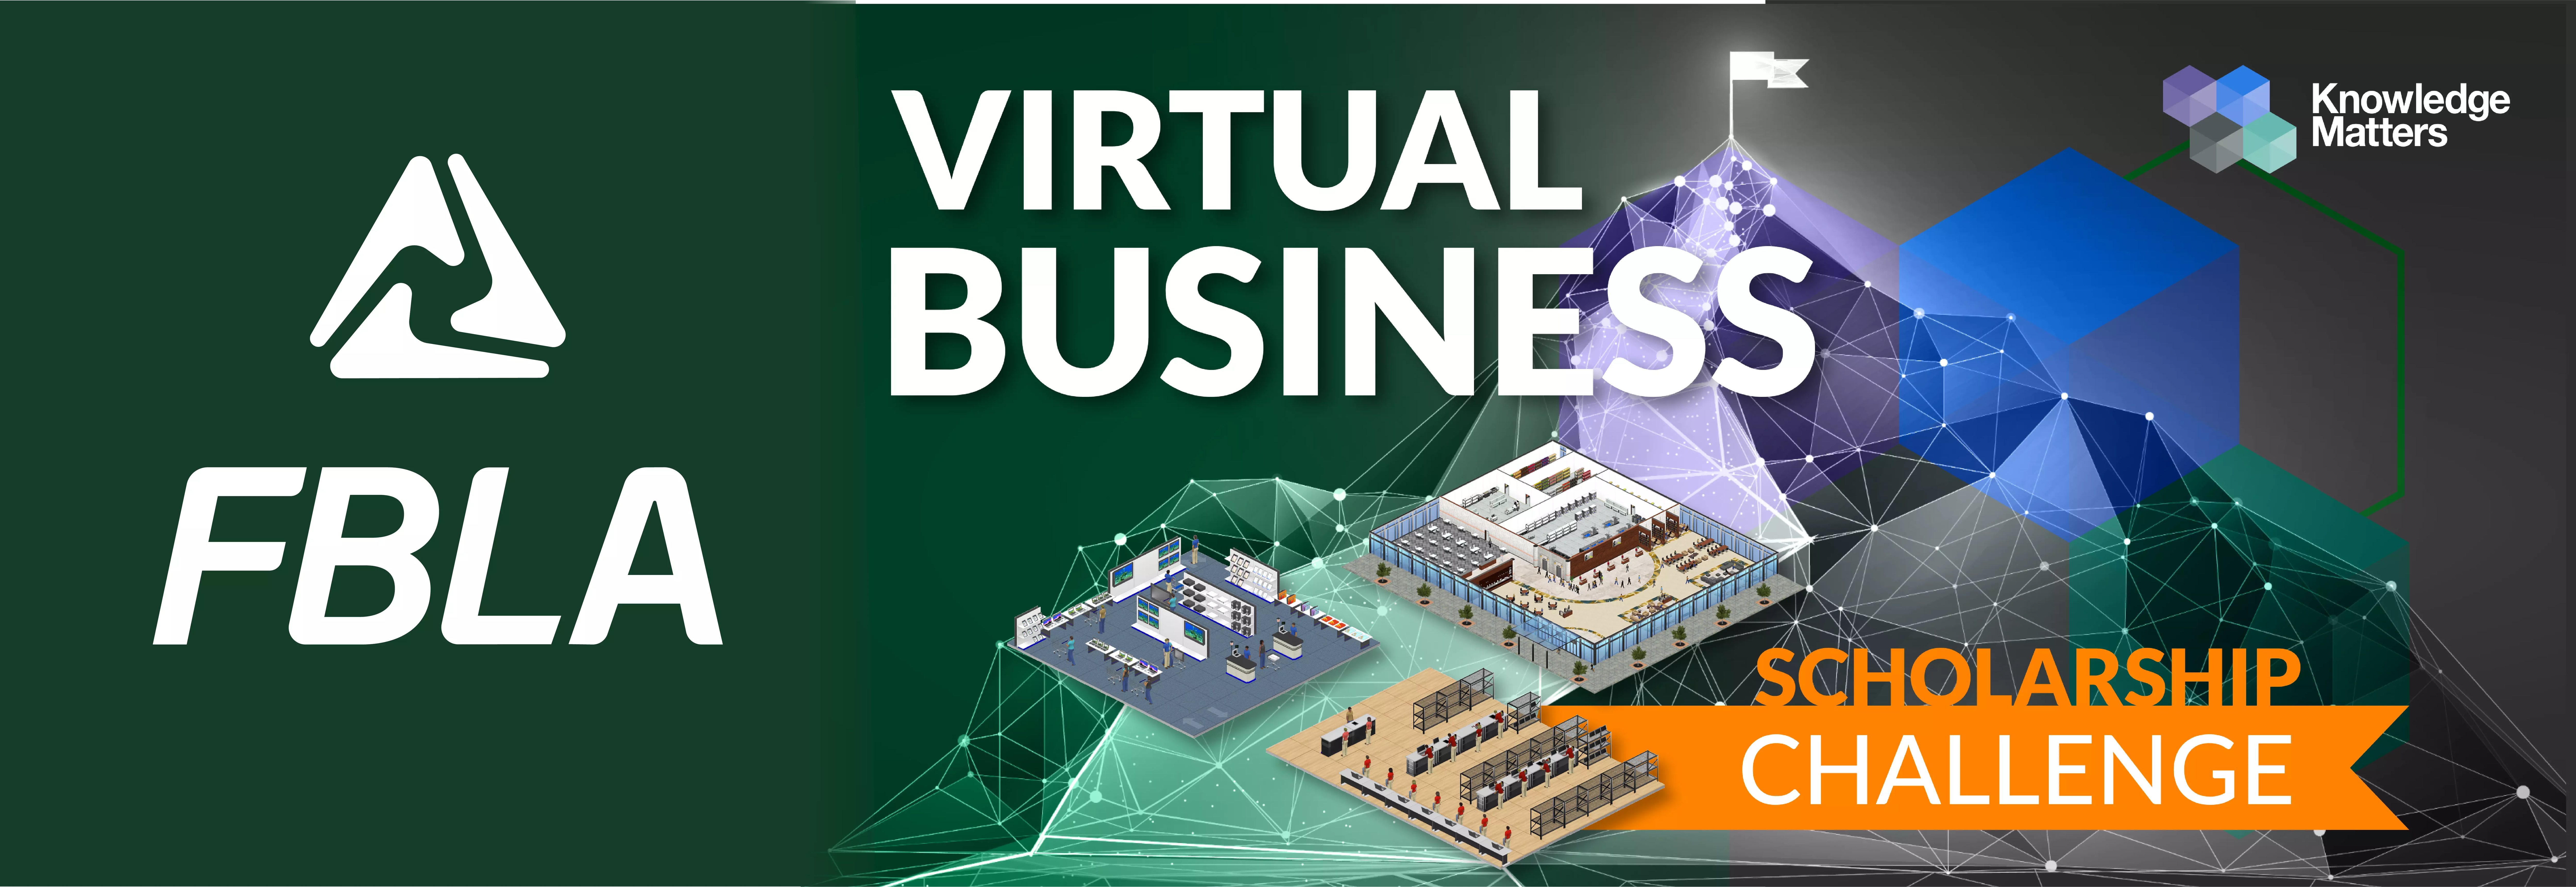 FBLA Virtual Business Challenge